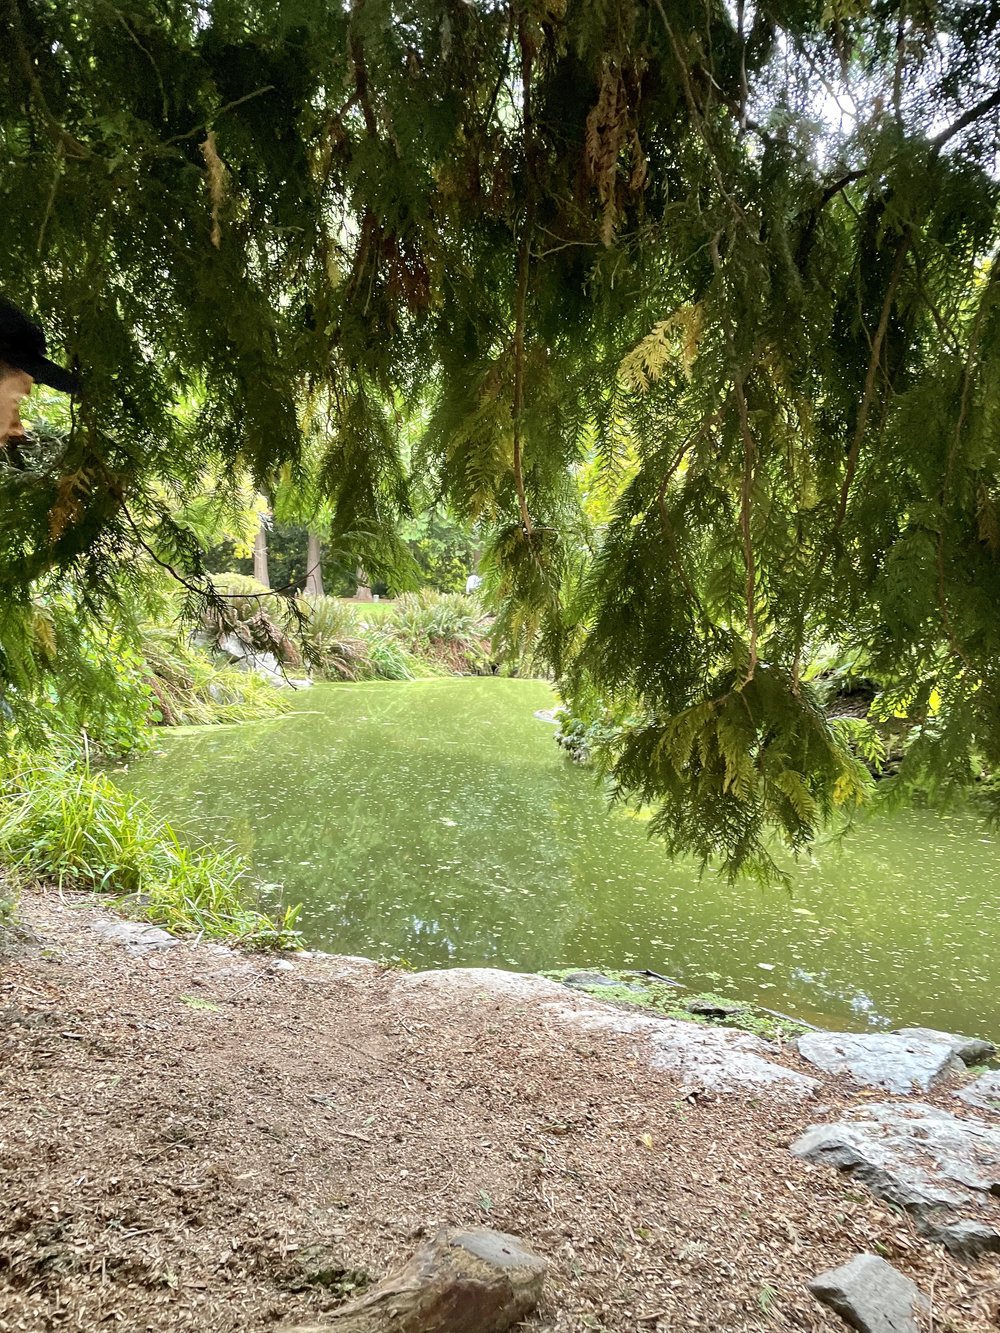 Hidden Pond